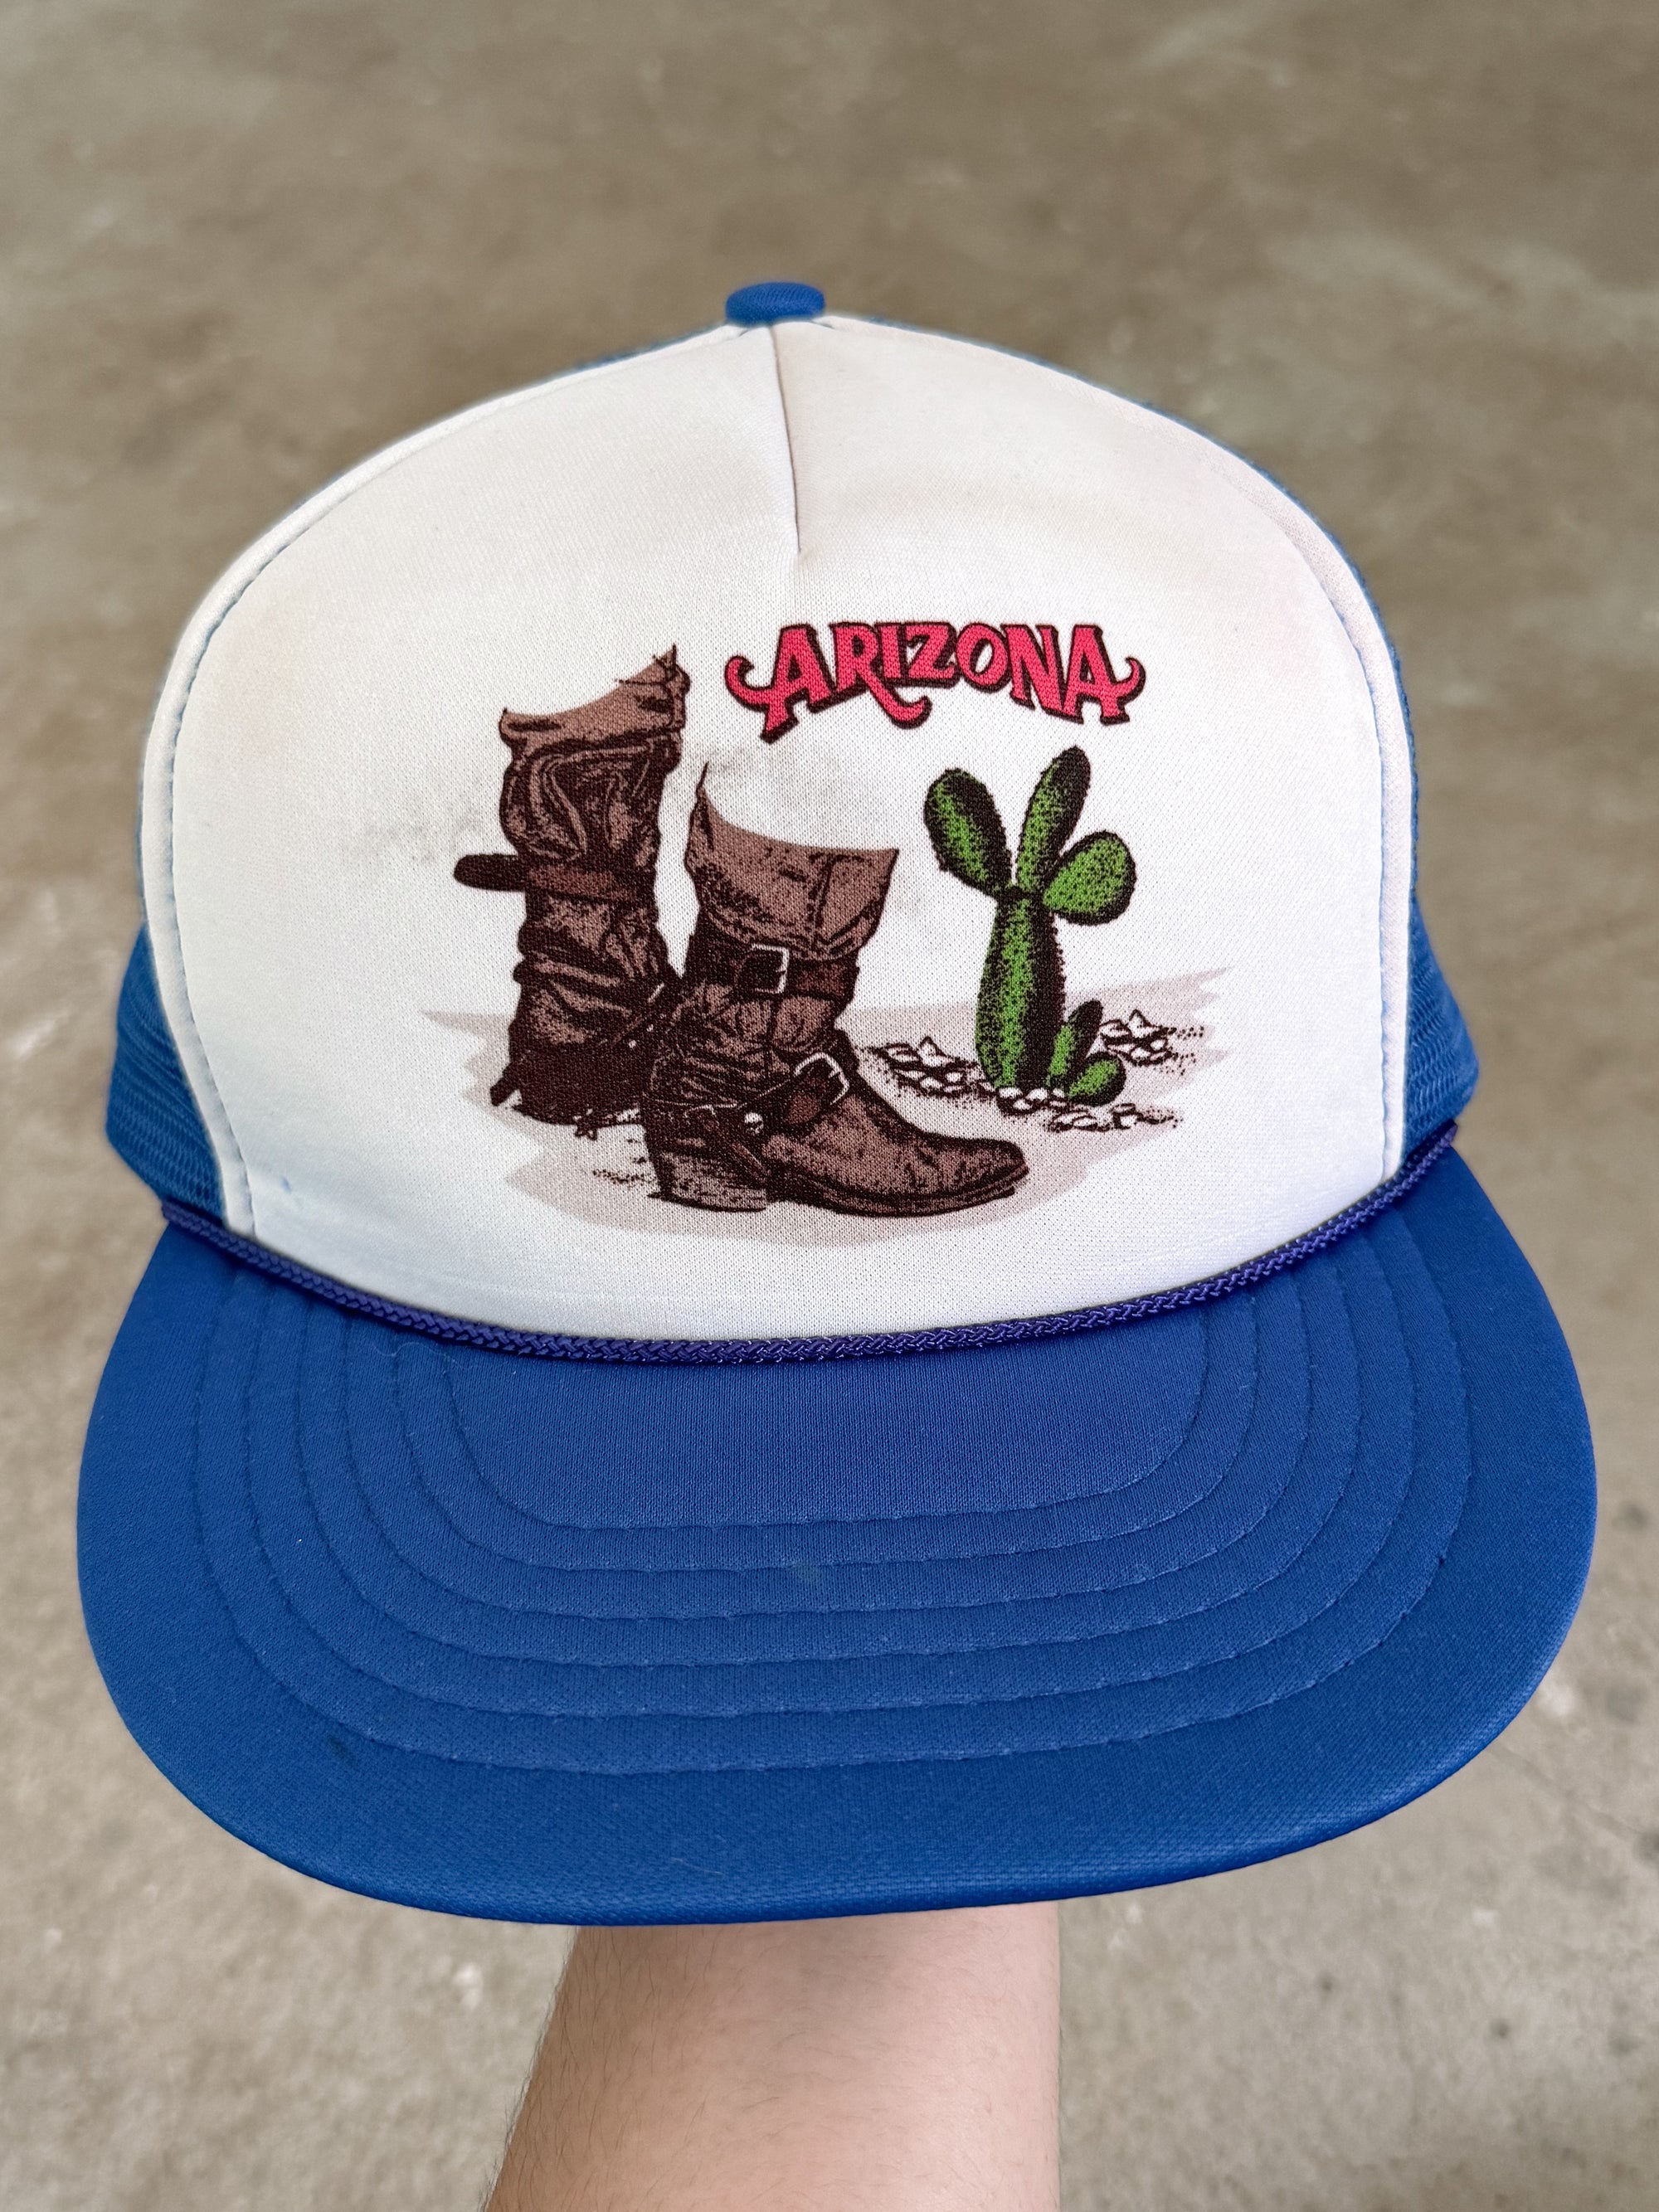 1990s "Arizona" Trucker Hat